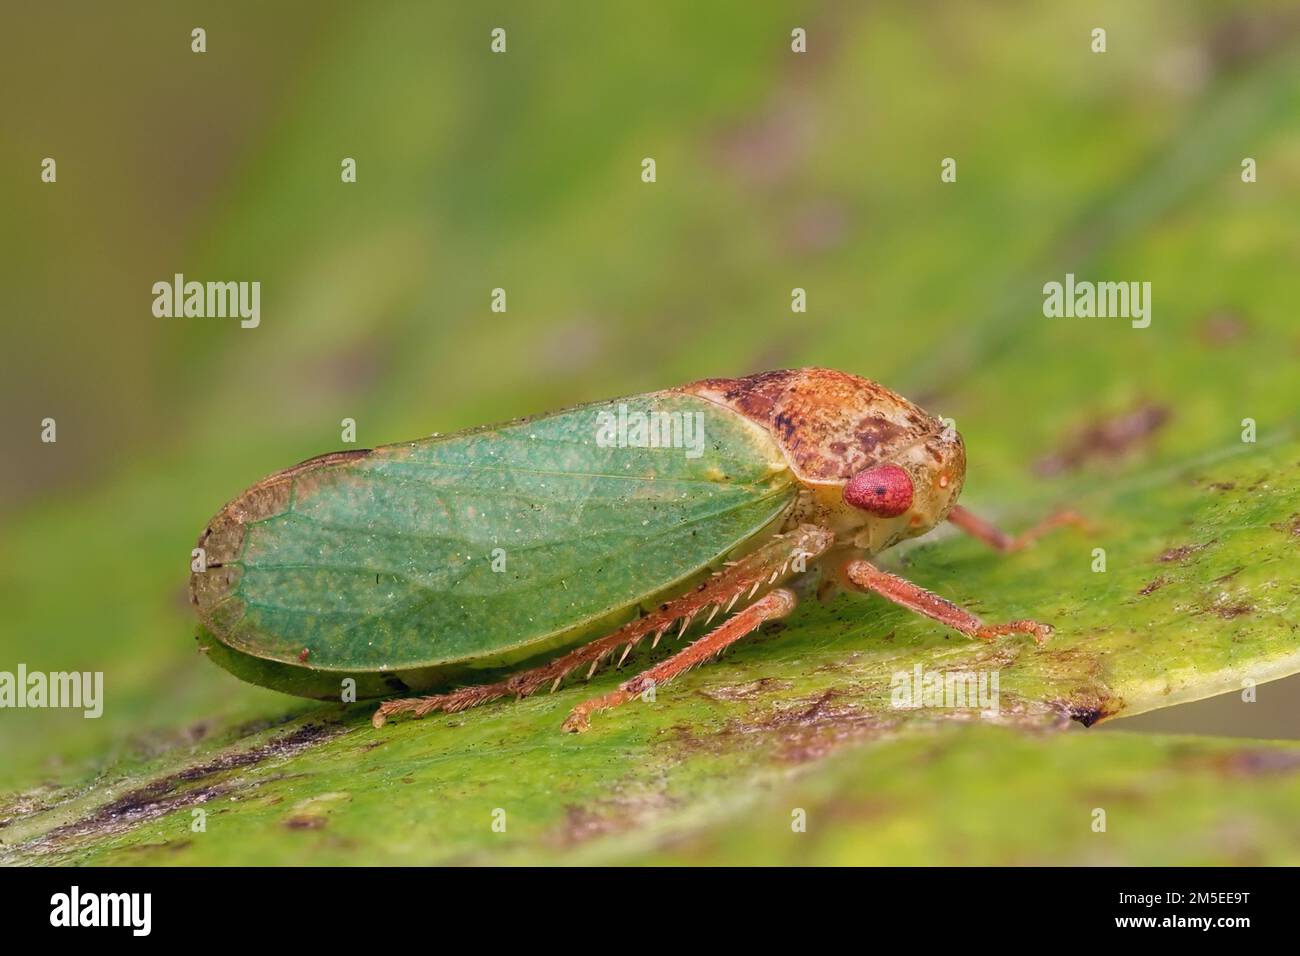 Iassus lanio leafhopper at rest on oak leaf. Tipperary, Ireland Stock Photo